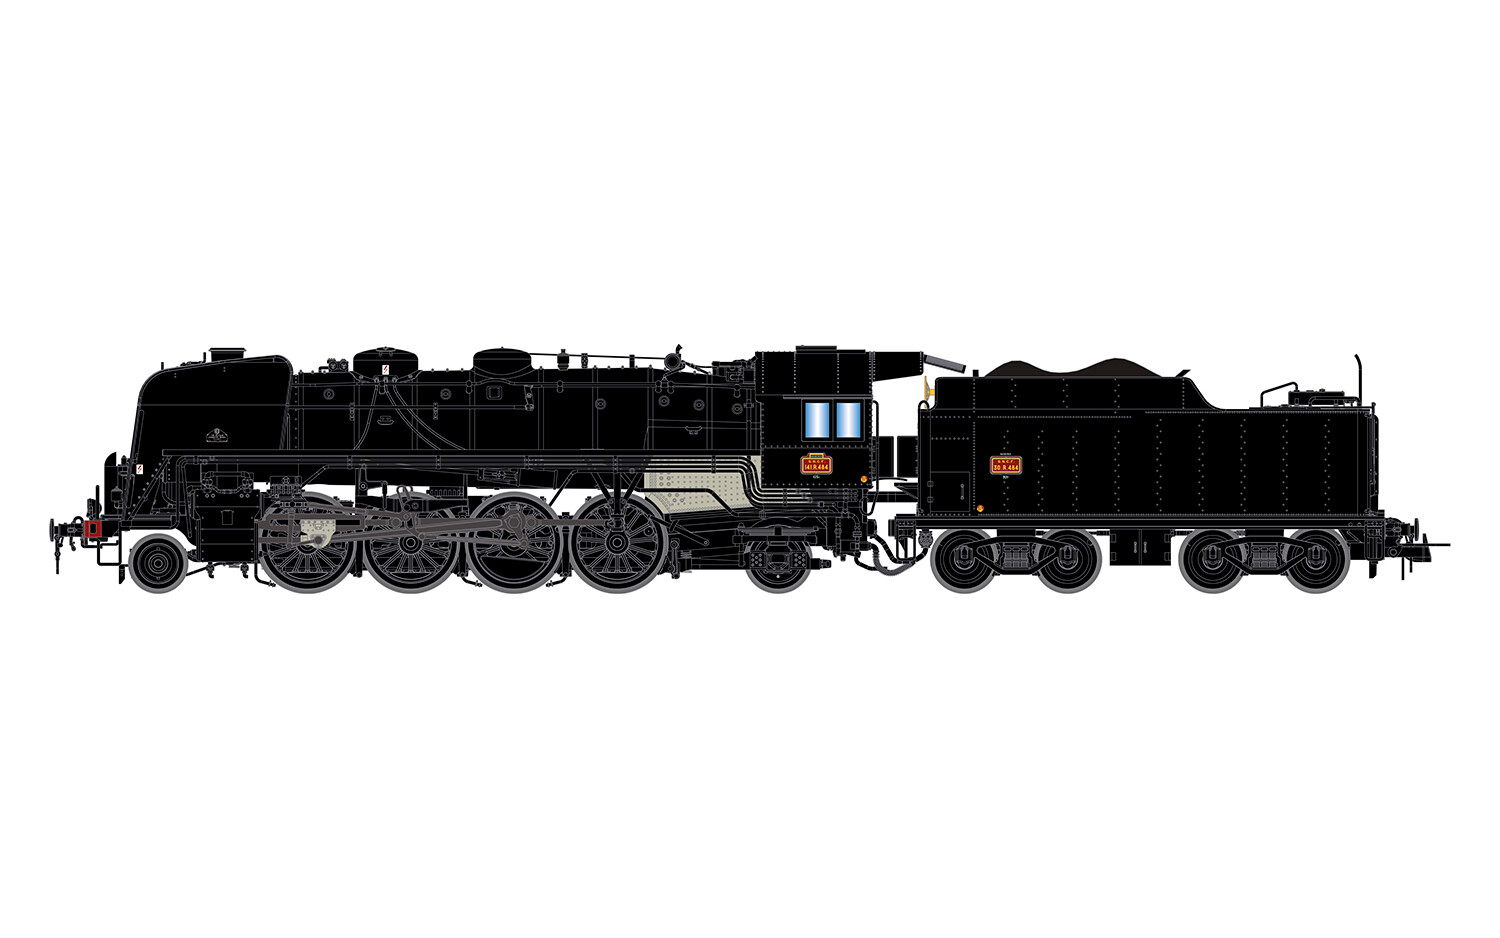 Jouef - Train Models, Buildings and Railways